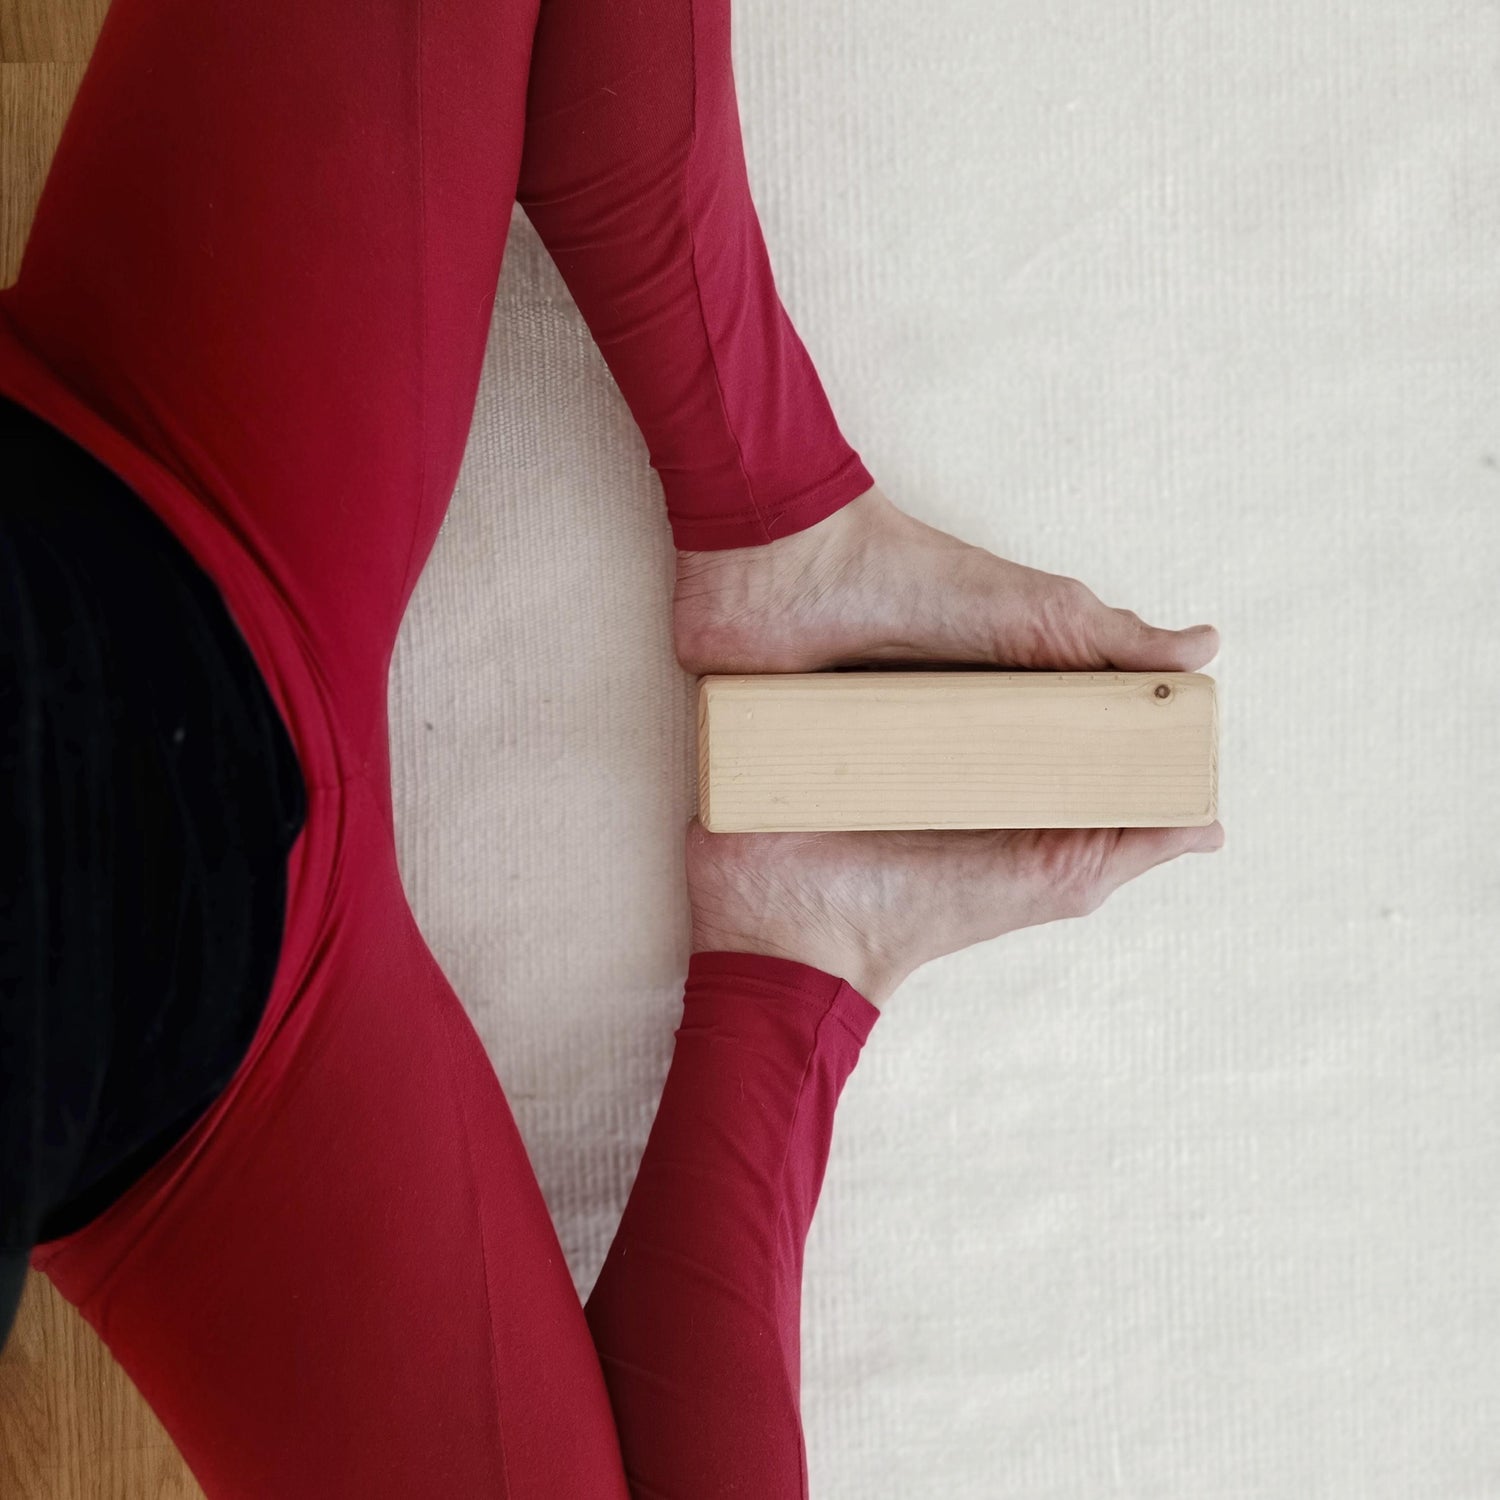 Wooden Yoga Blocks for Iyengar Yoga Studios - Eco-Friendly & Customizable